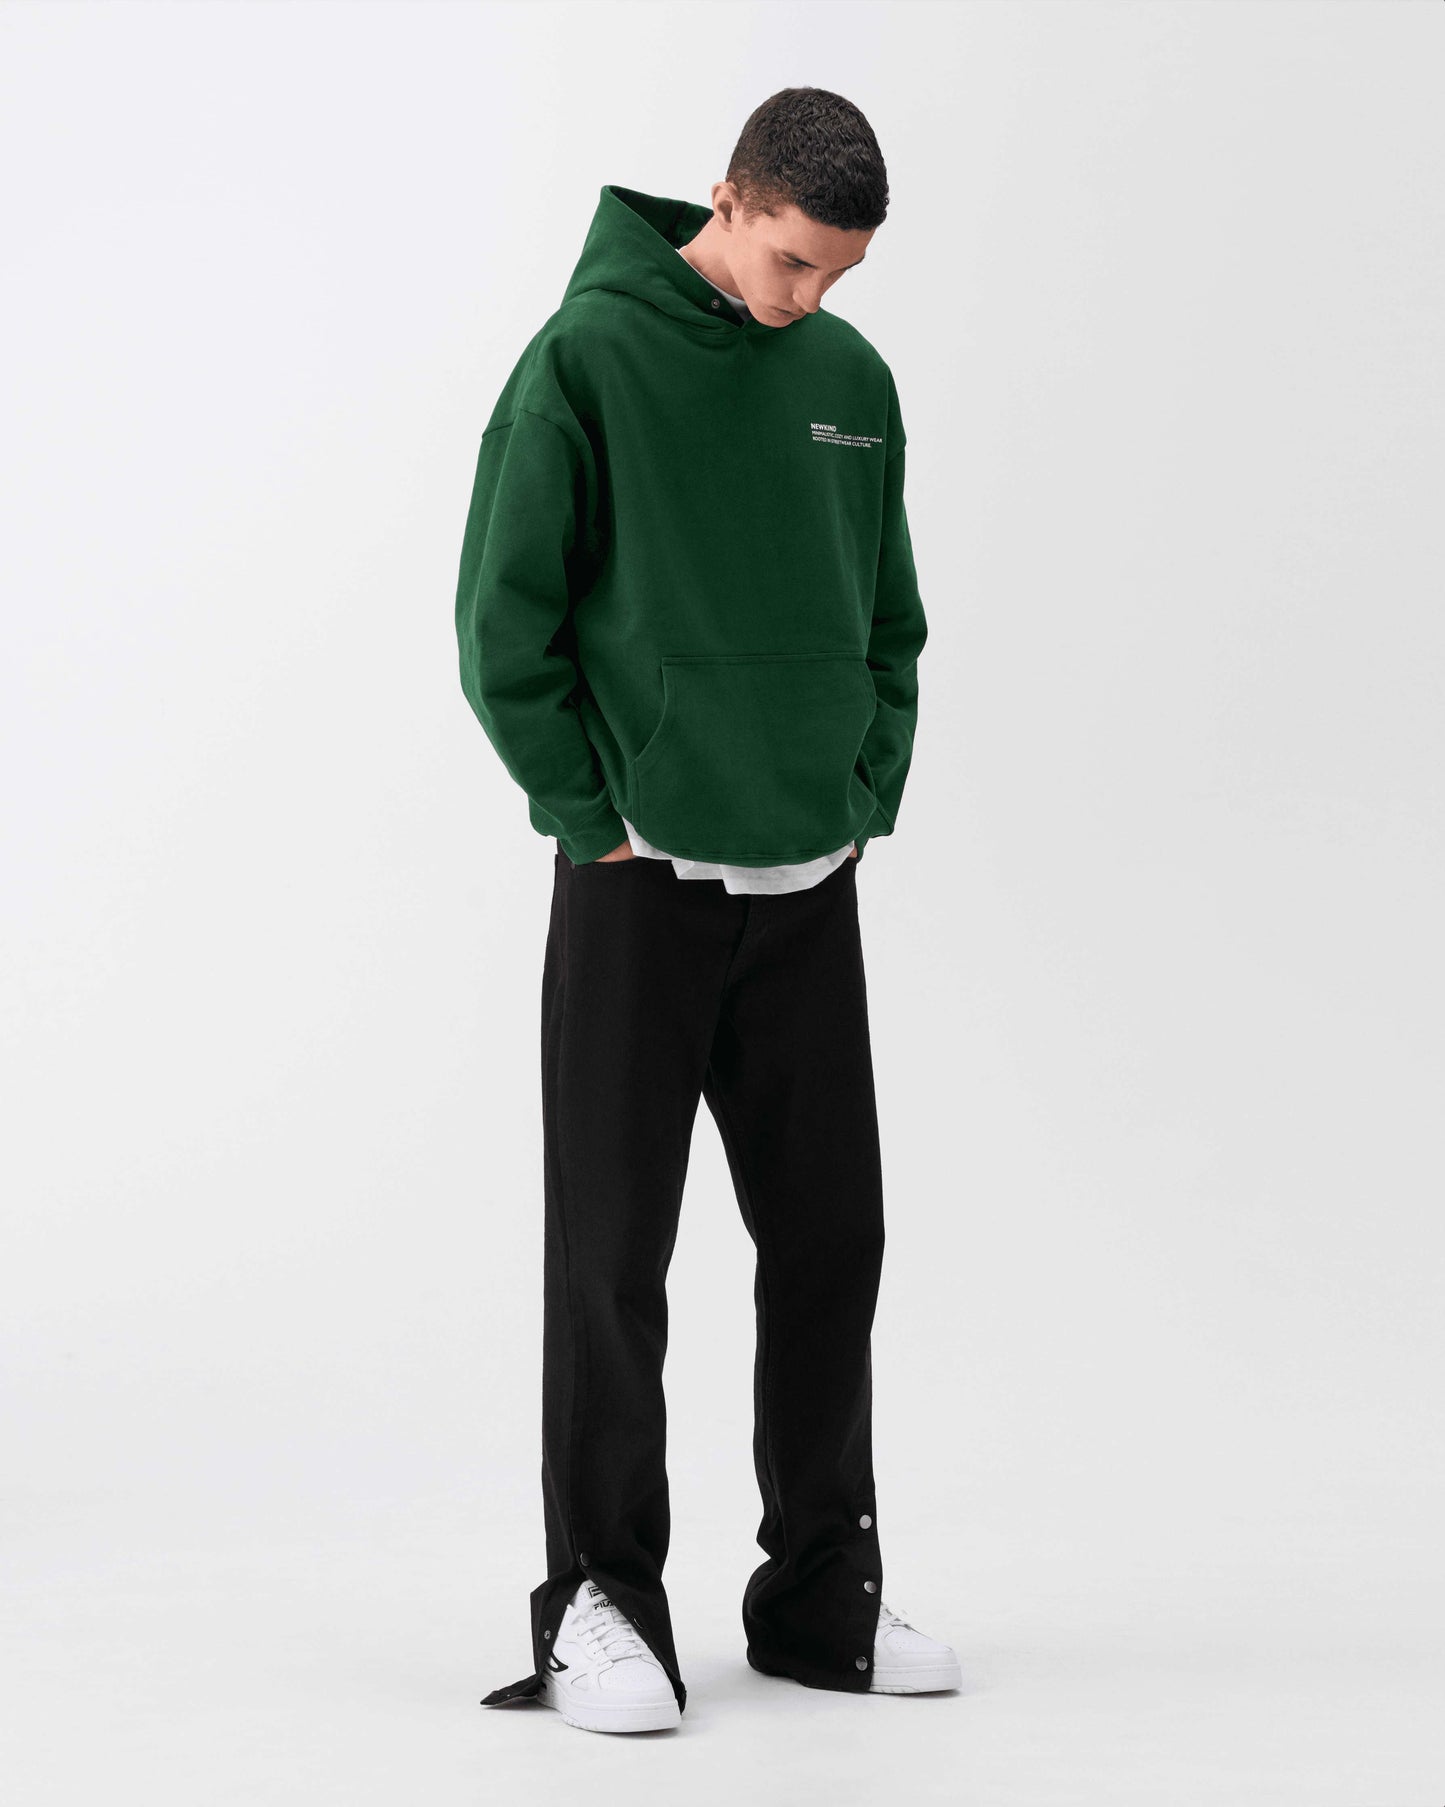 NEWKIND / Forest green hoodie, green hoodie, essential hoodie, hoodie, hoodies, hoodie for men, men's hoodie, graphic hoodies